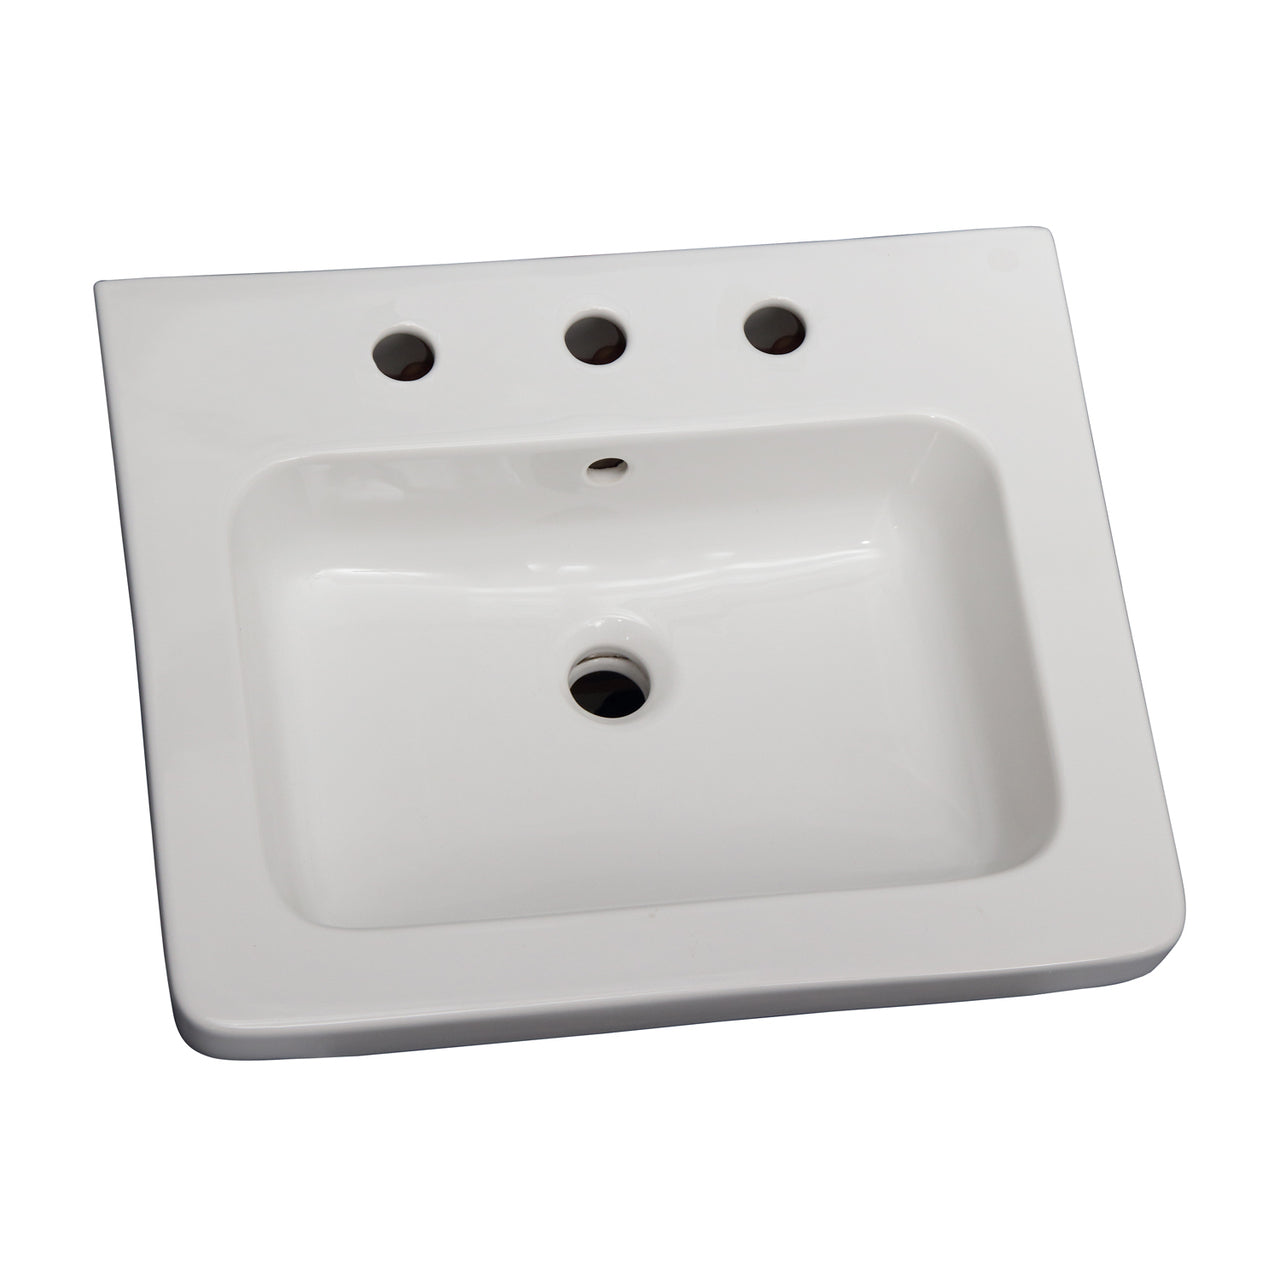 Resort 550 Pedestal Bathroom Sink White for 8" Widespread